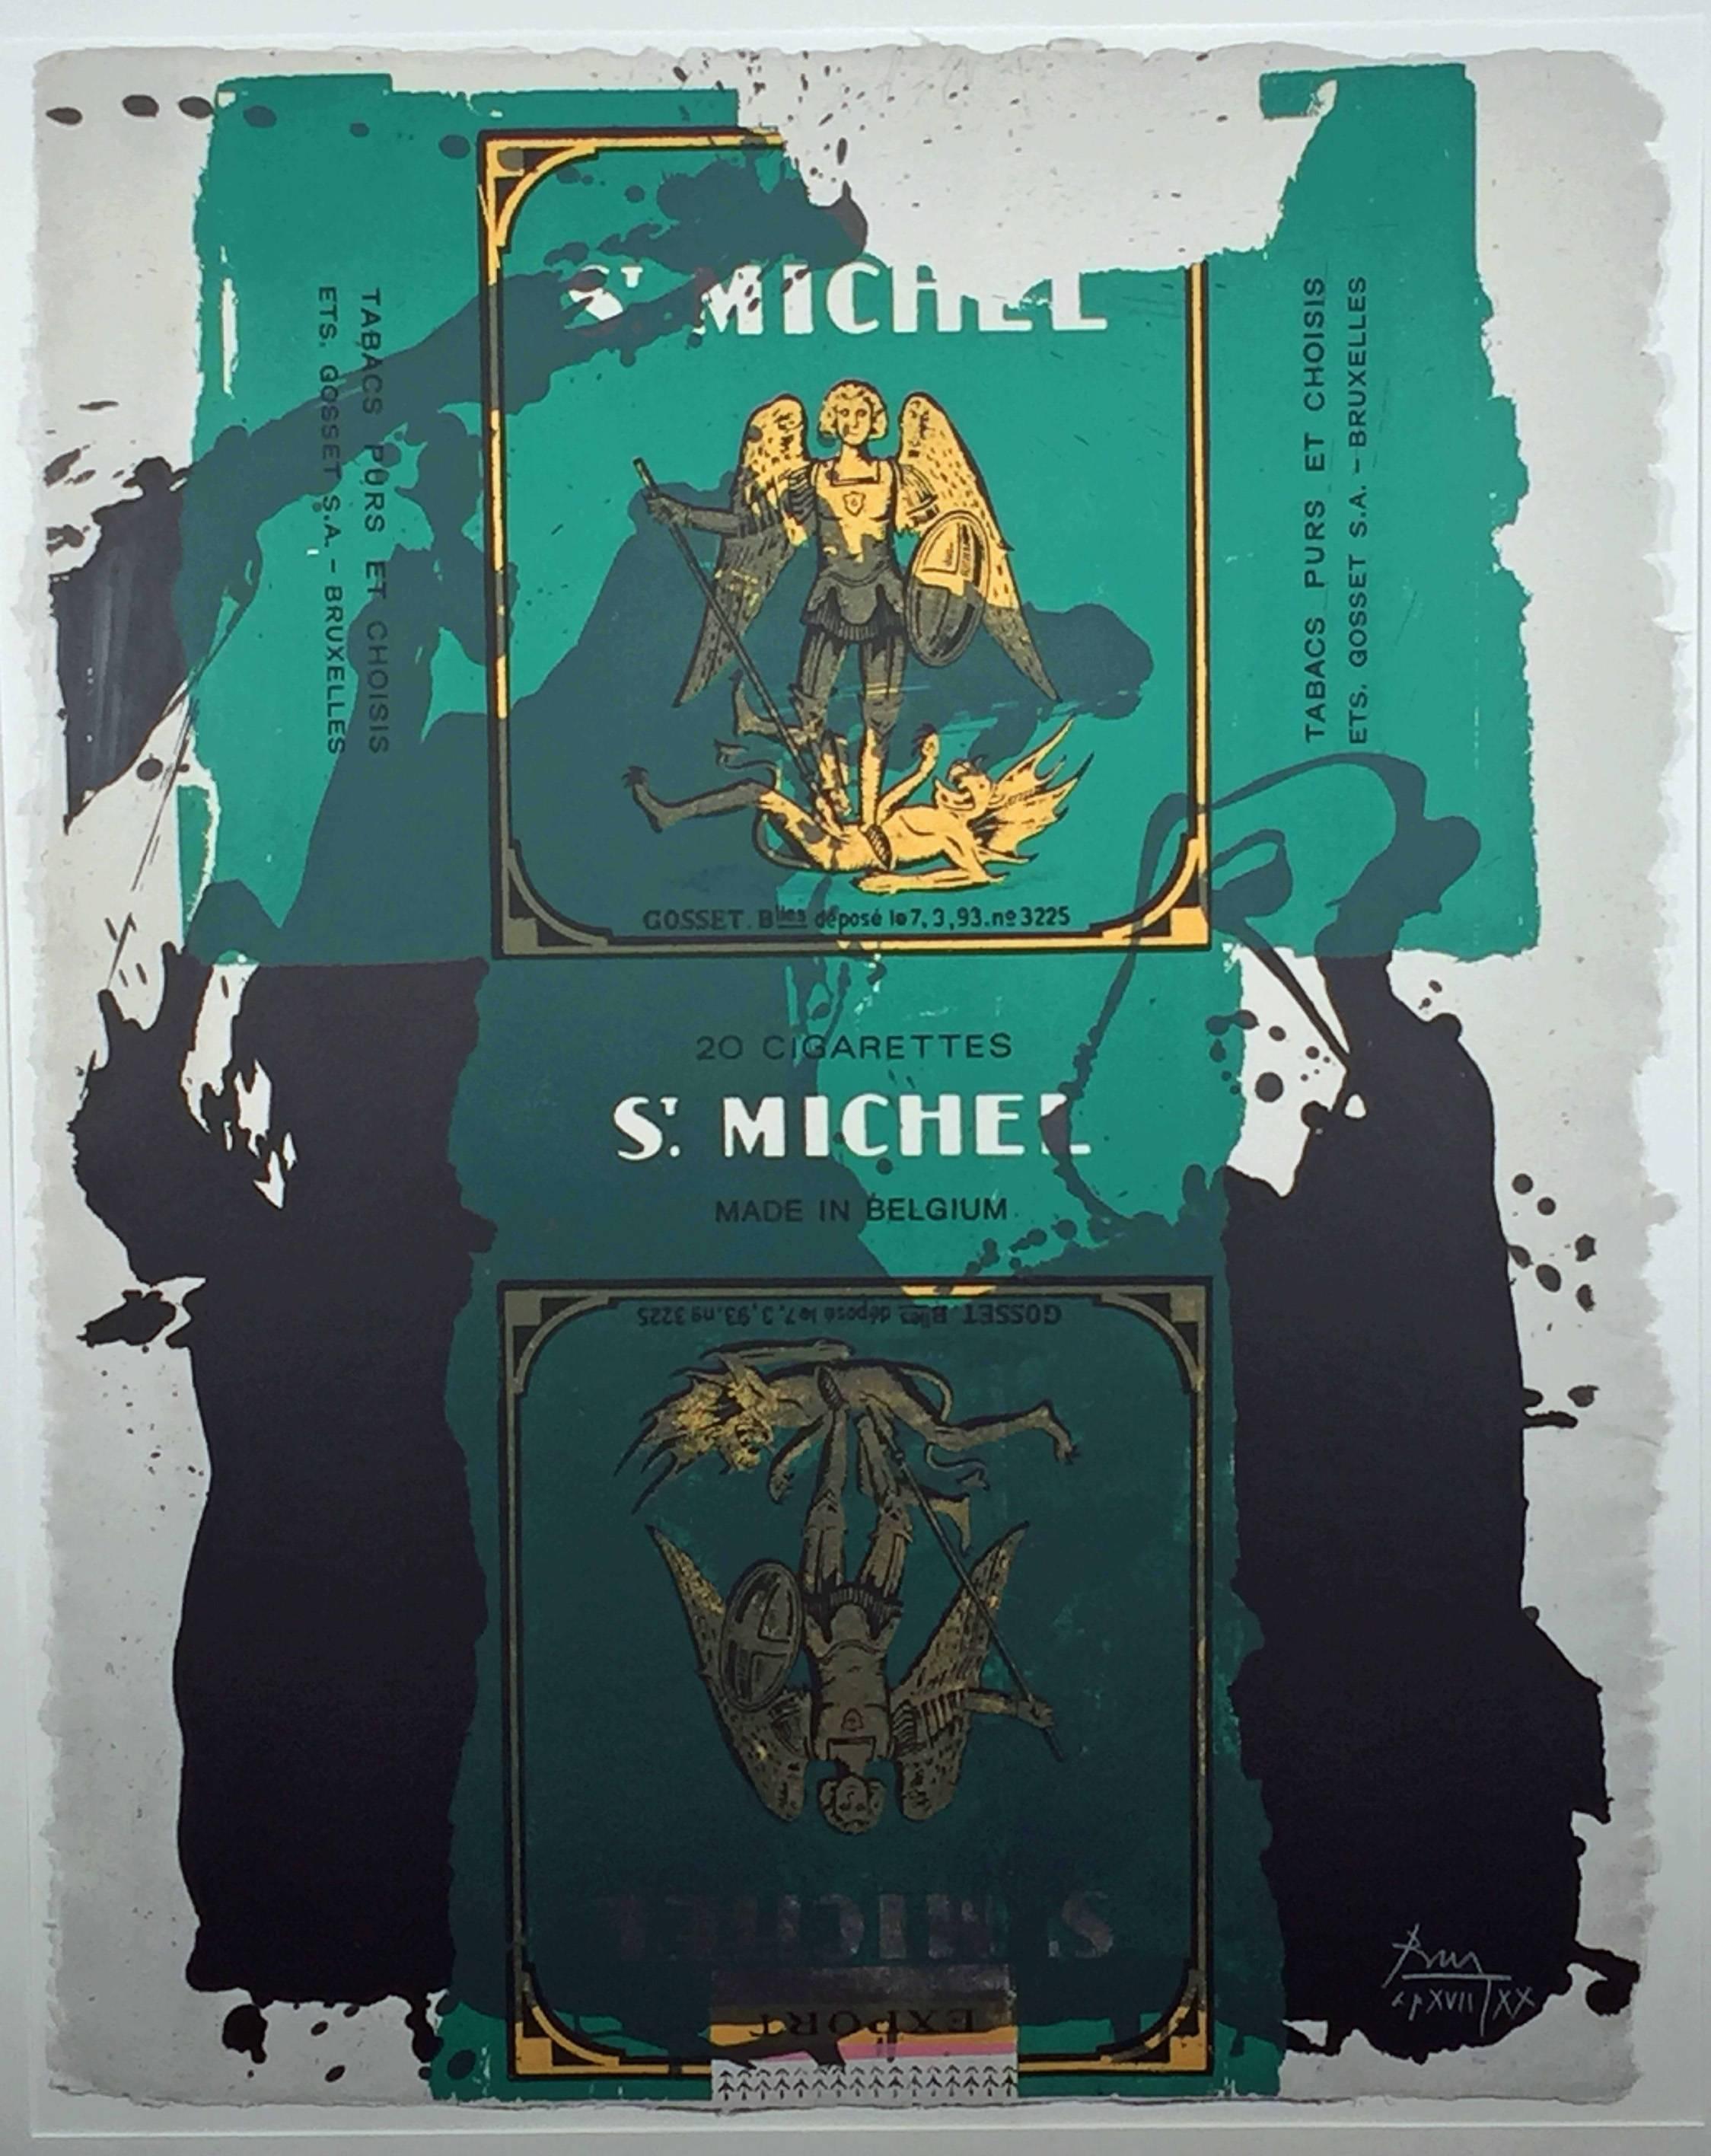 ST. MICHAEL III - Print by Robert Motherwell